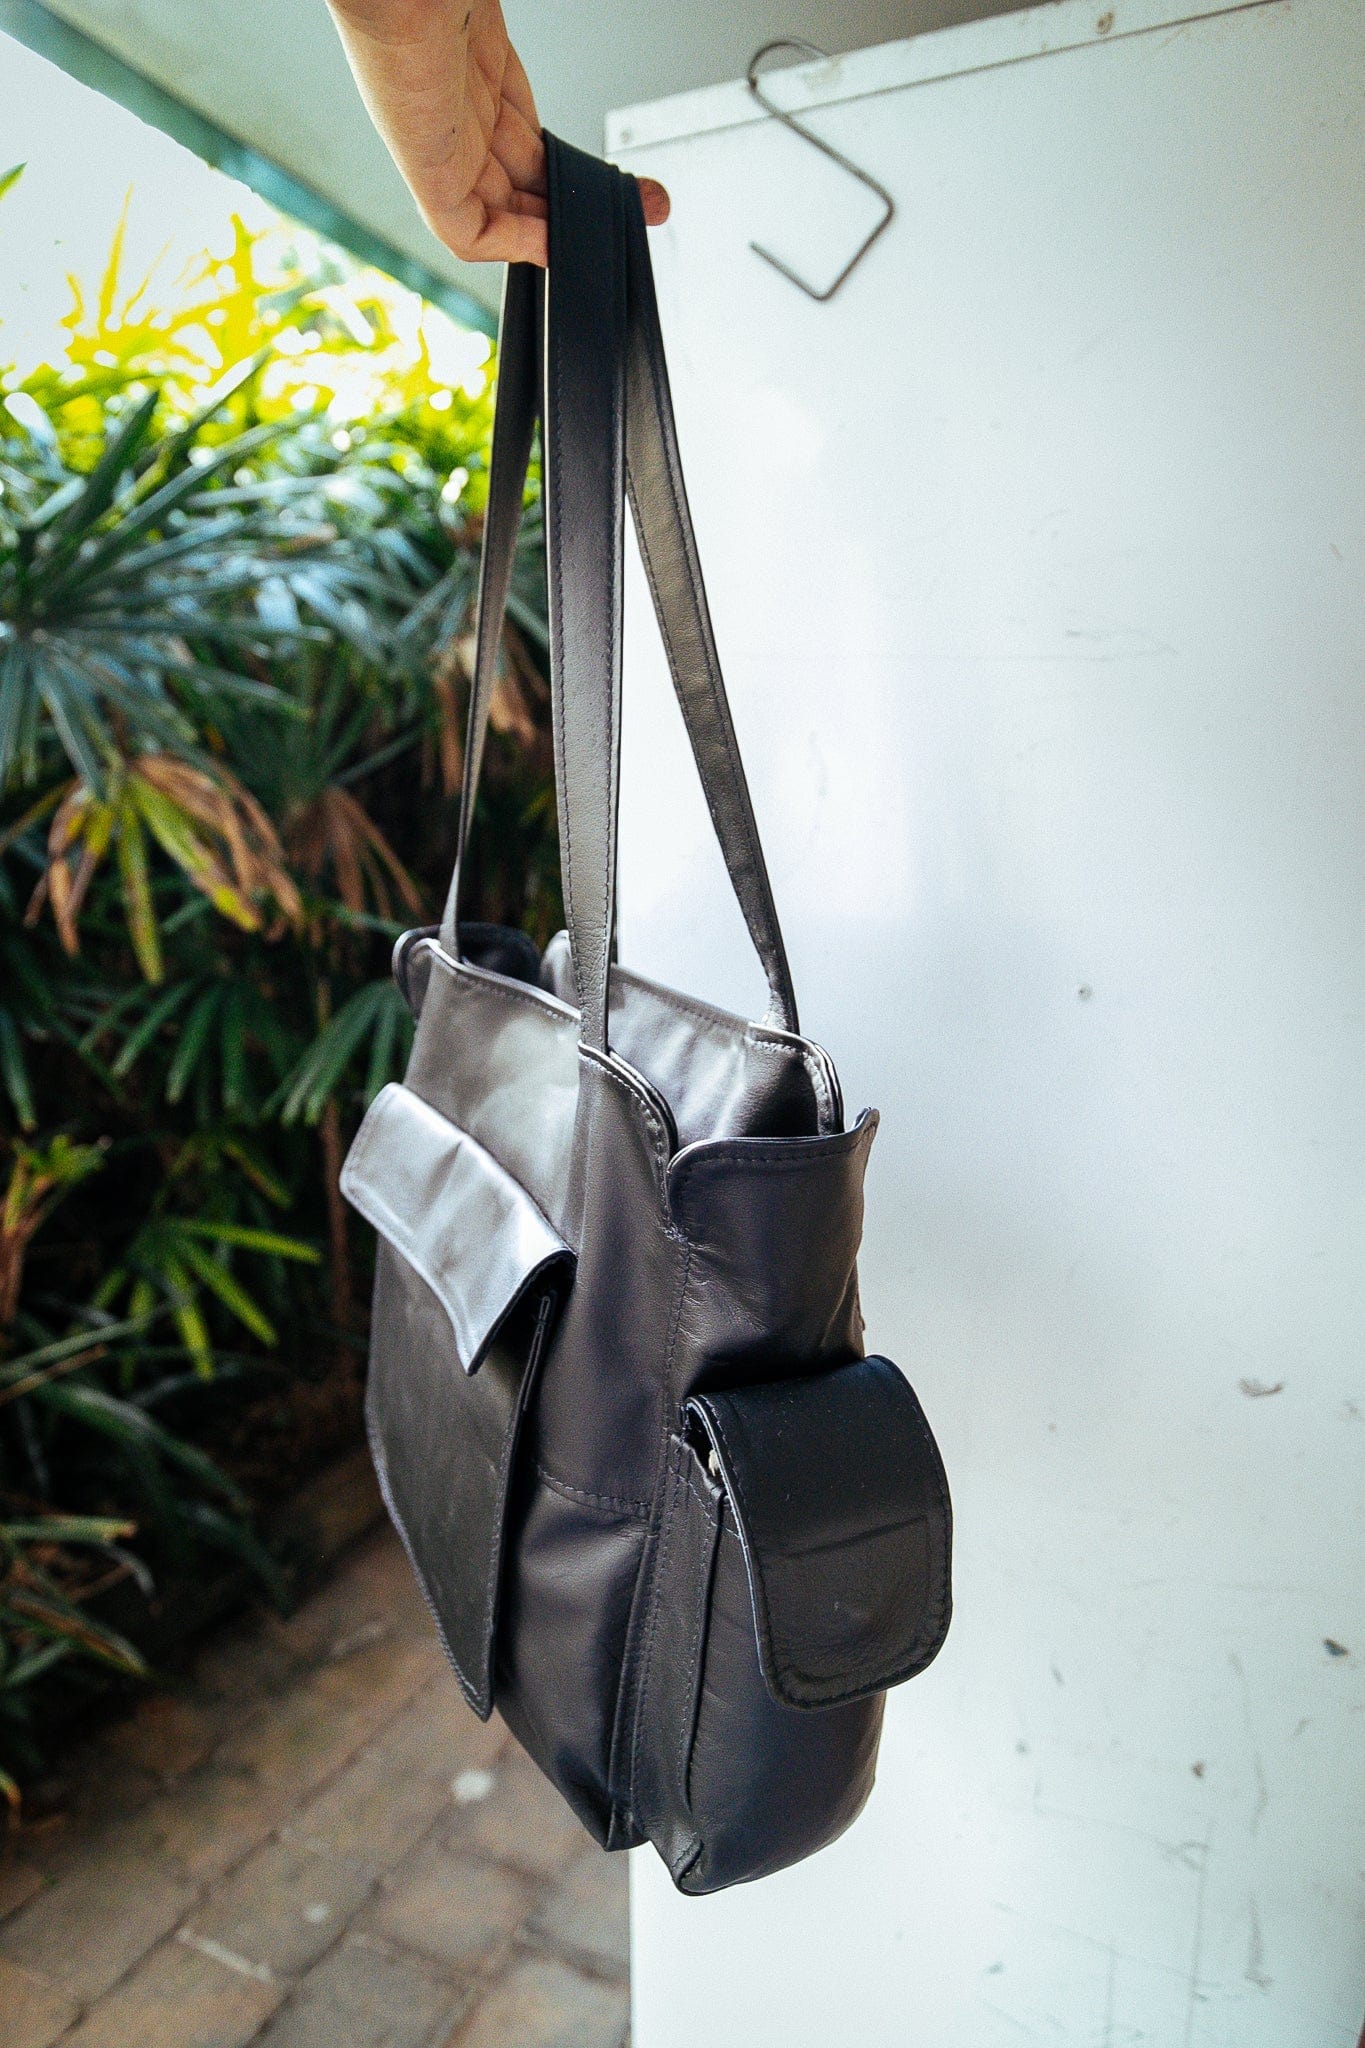 The Real McCaul Handbags Polly Handbag Australian Made Australian Owned Partition Leather Handbag- Kangaroo & Cowhide Australian Made